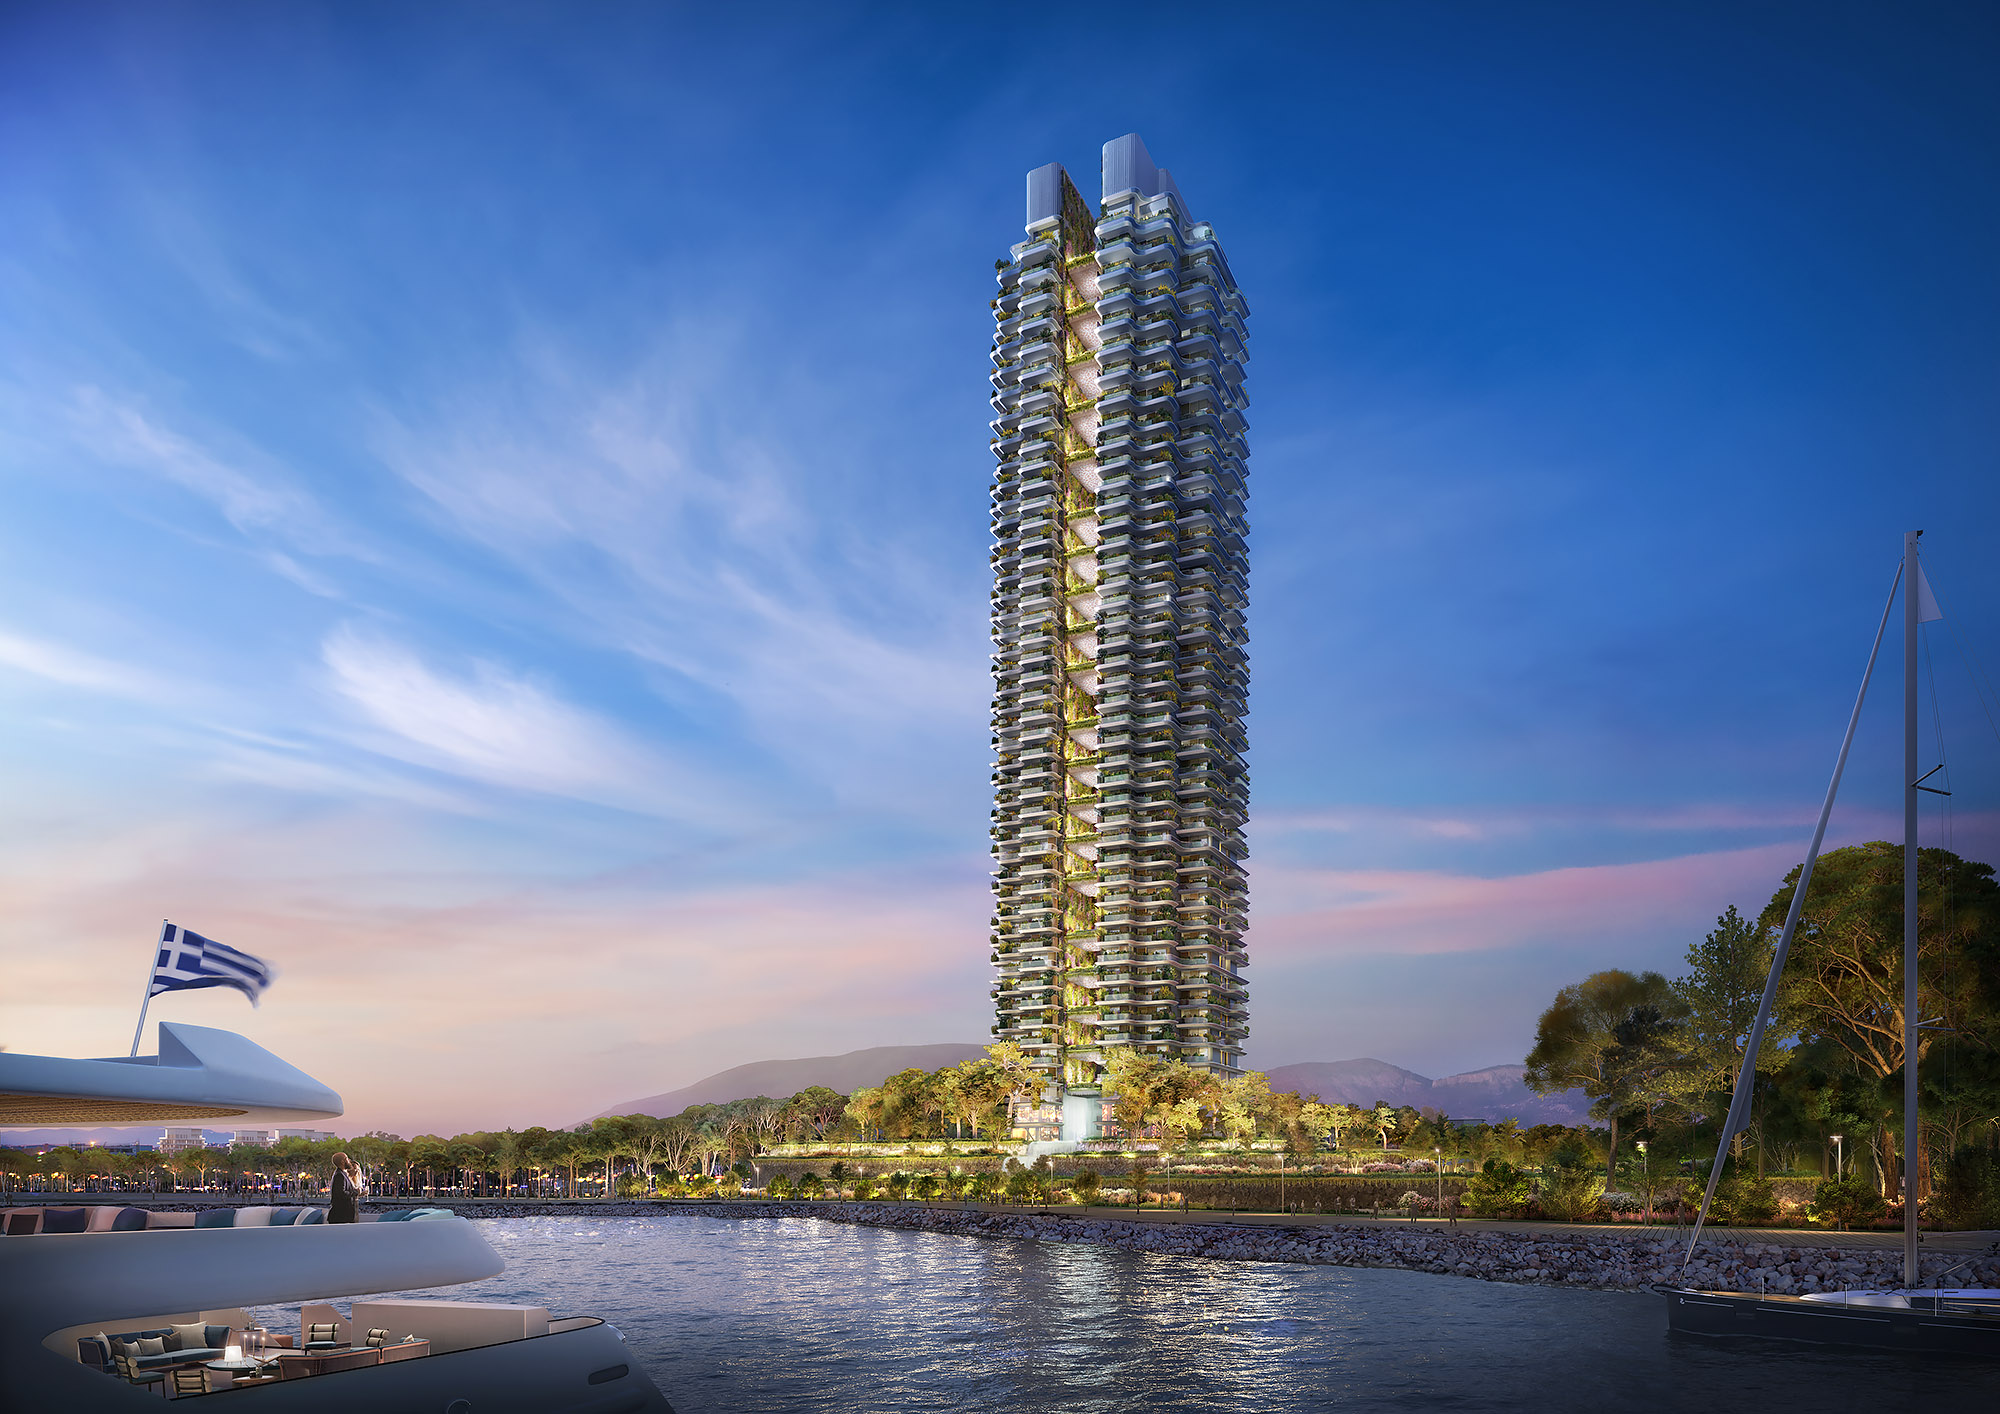 More information about "Εκδόθηκε η πρώτη οικοδομική άδεια του ουρανοξύστη Riviera Tower στο Ελληνικό"